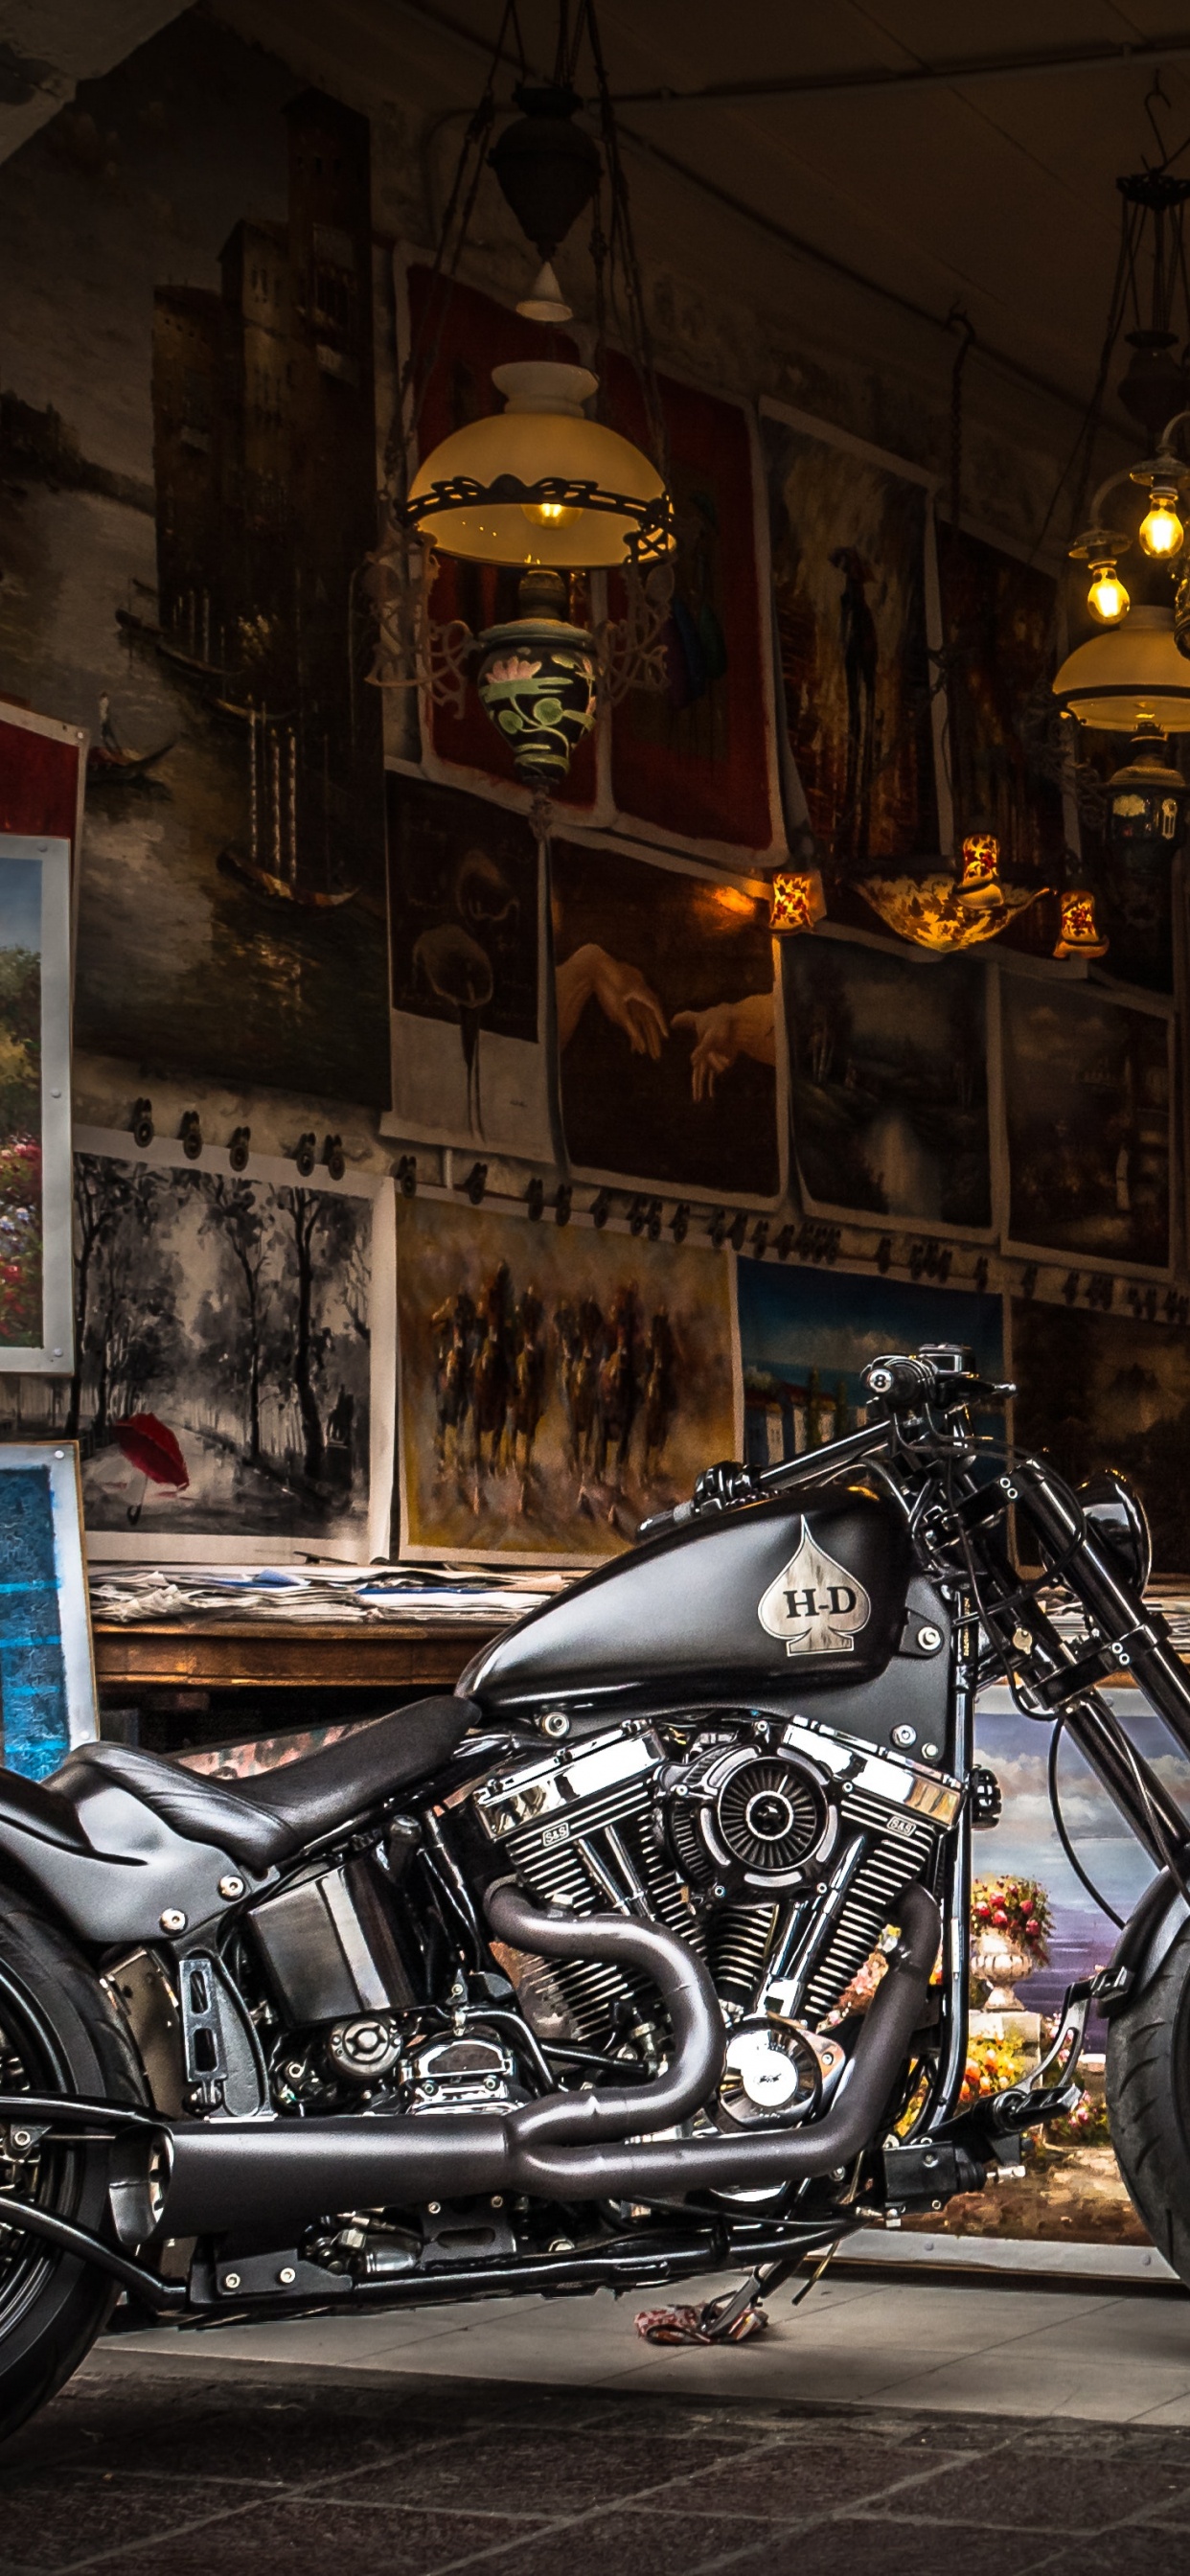 Motocicleta Cruiser Negra Estacionada Junto a la Tienda. Wallpaper in 1242x2688 Resolution